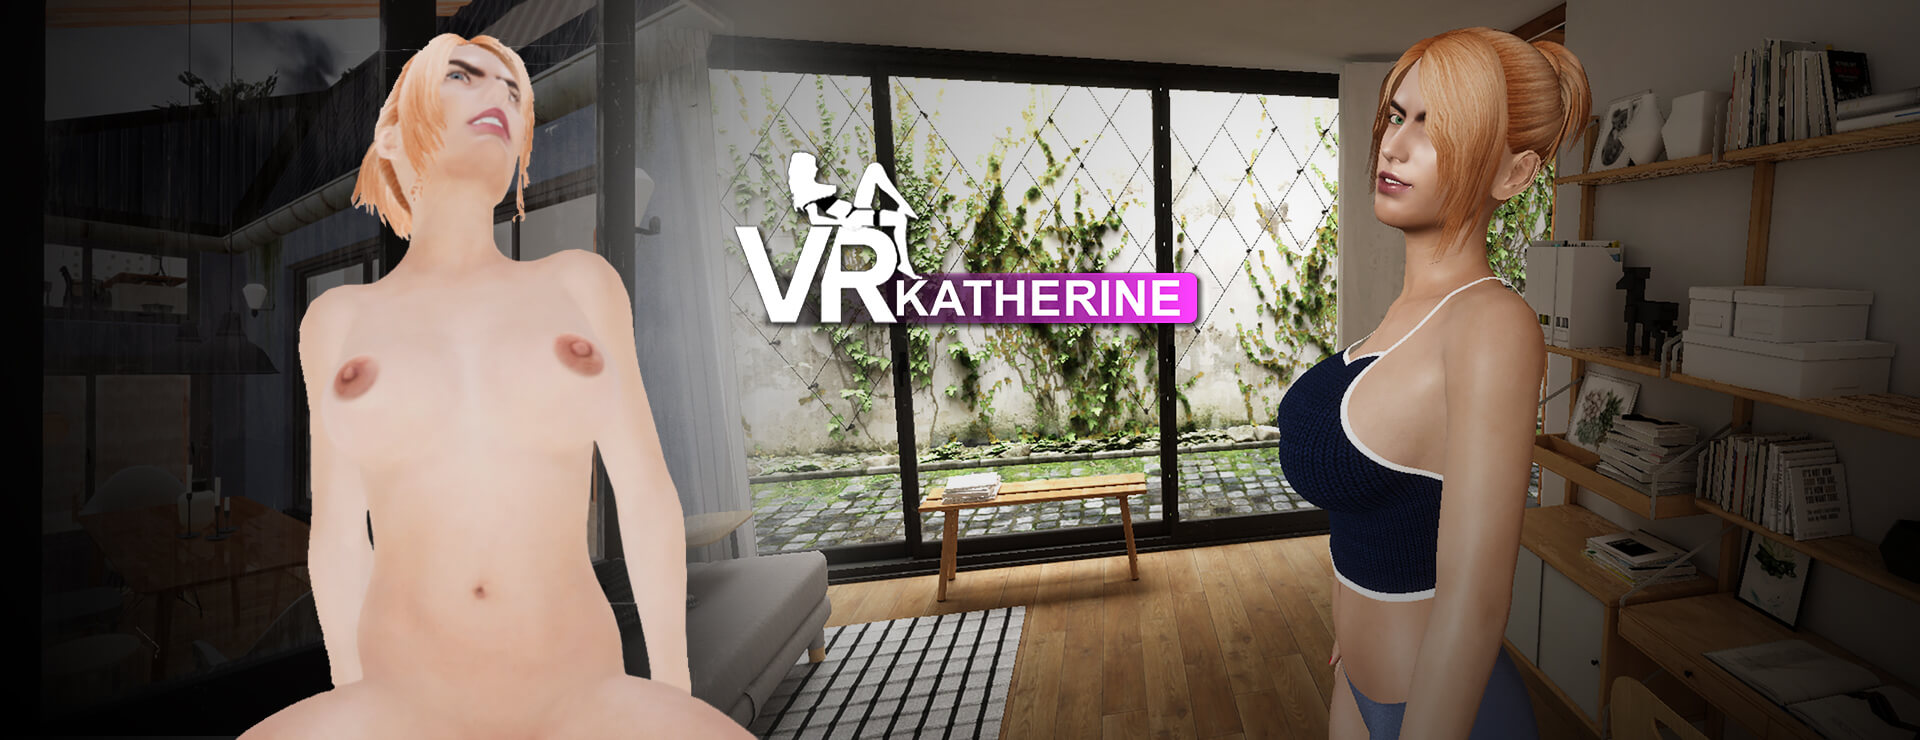 VR Katherine - Simulation Game